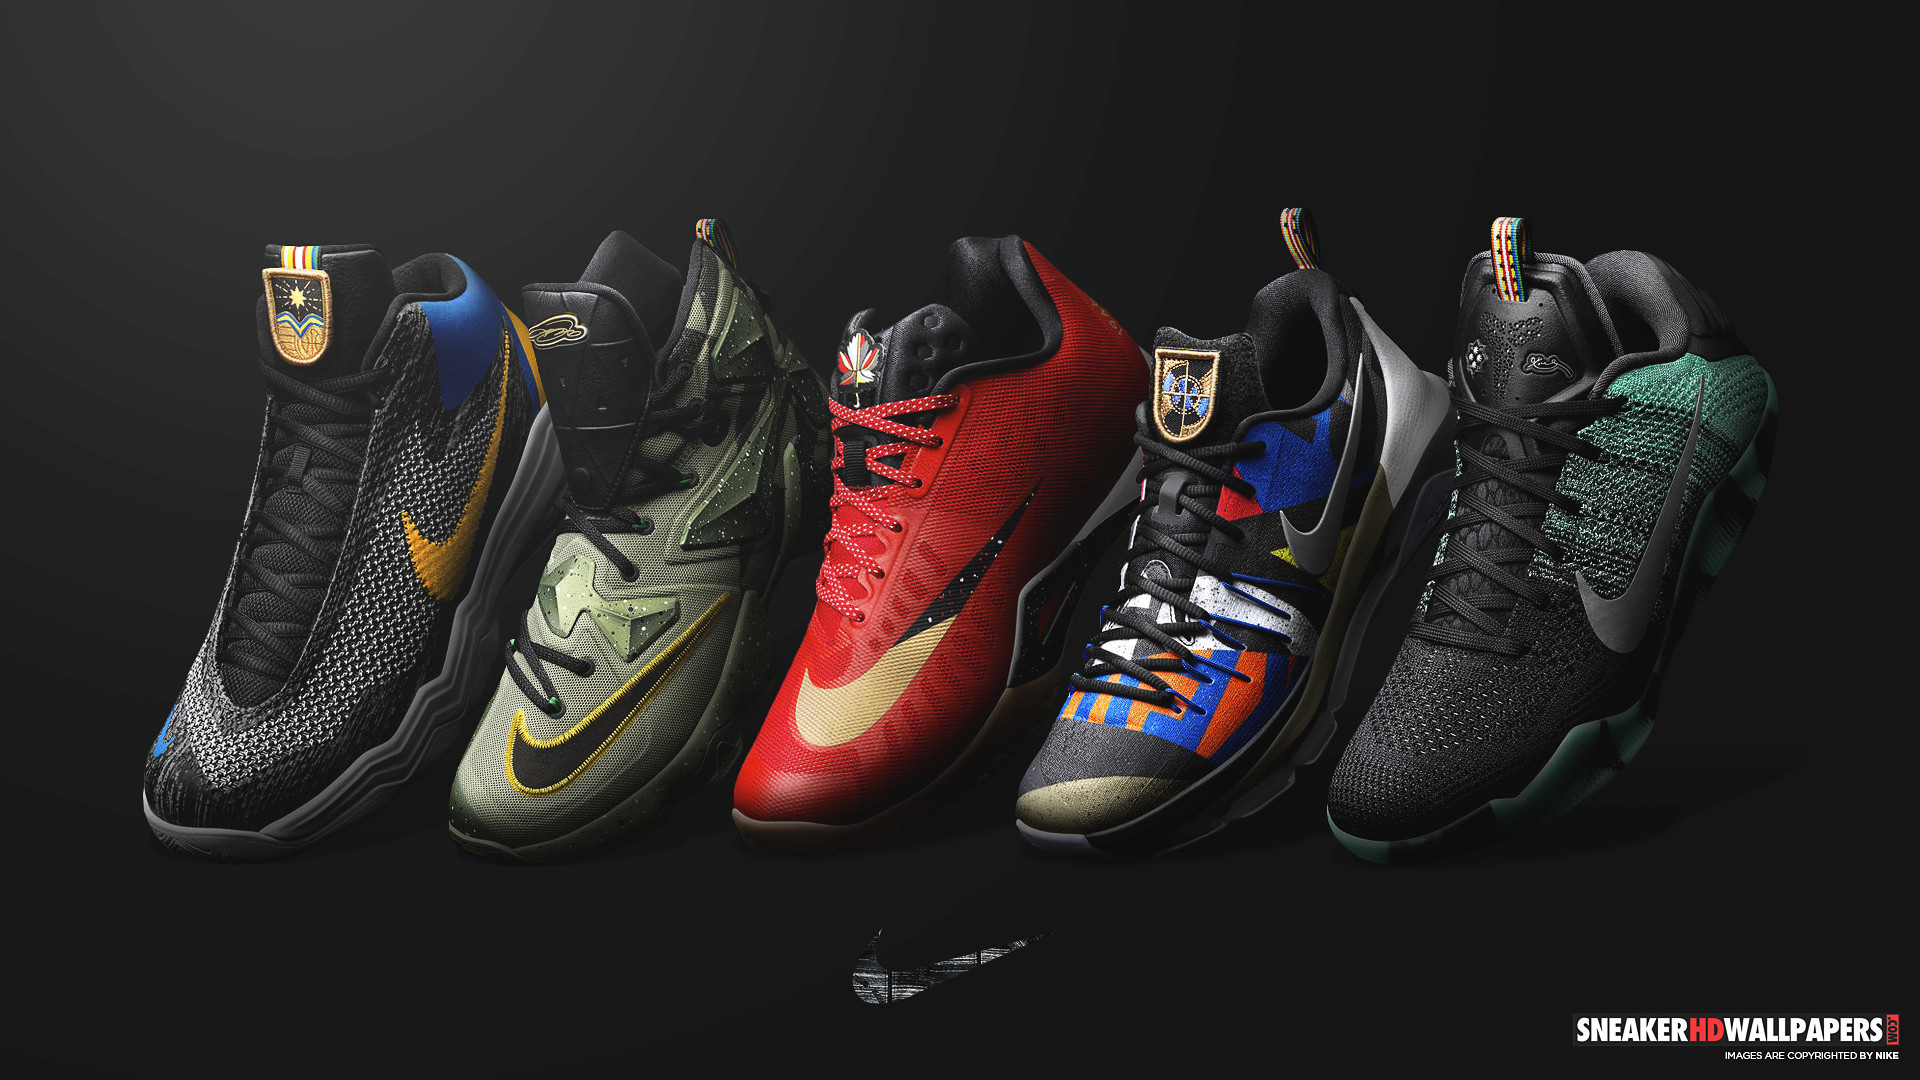 Nike Basketball Shoes Wallpapers